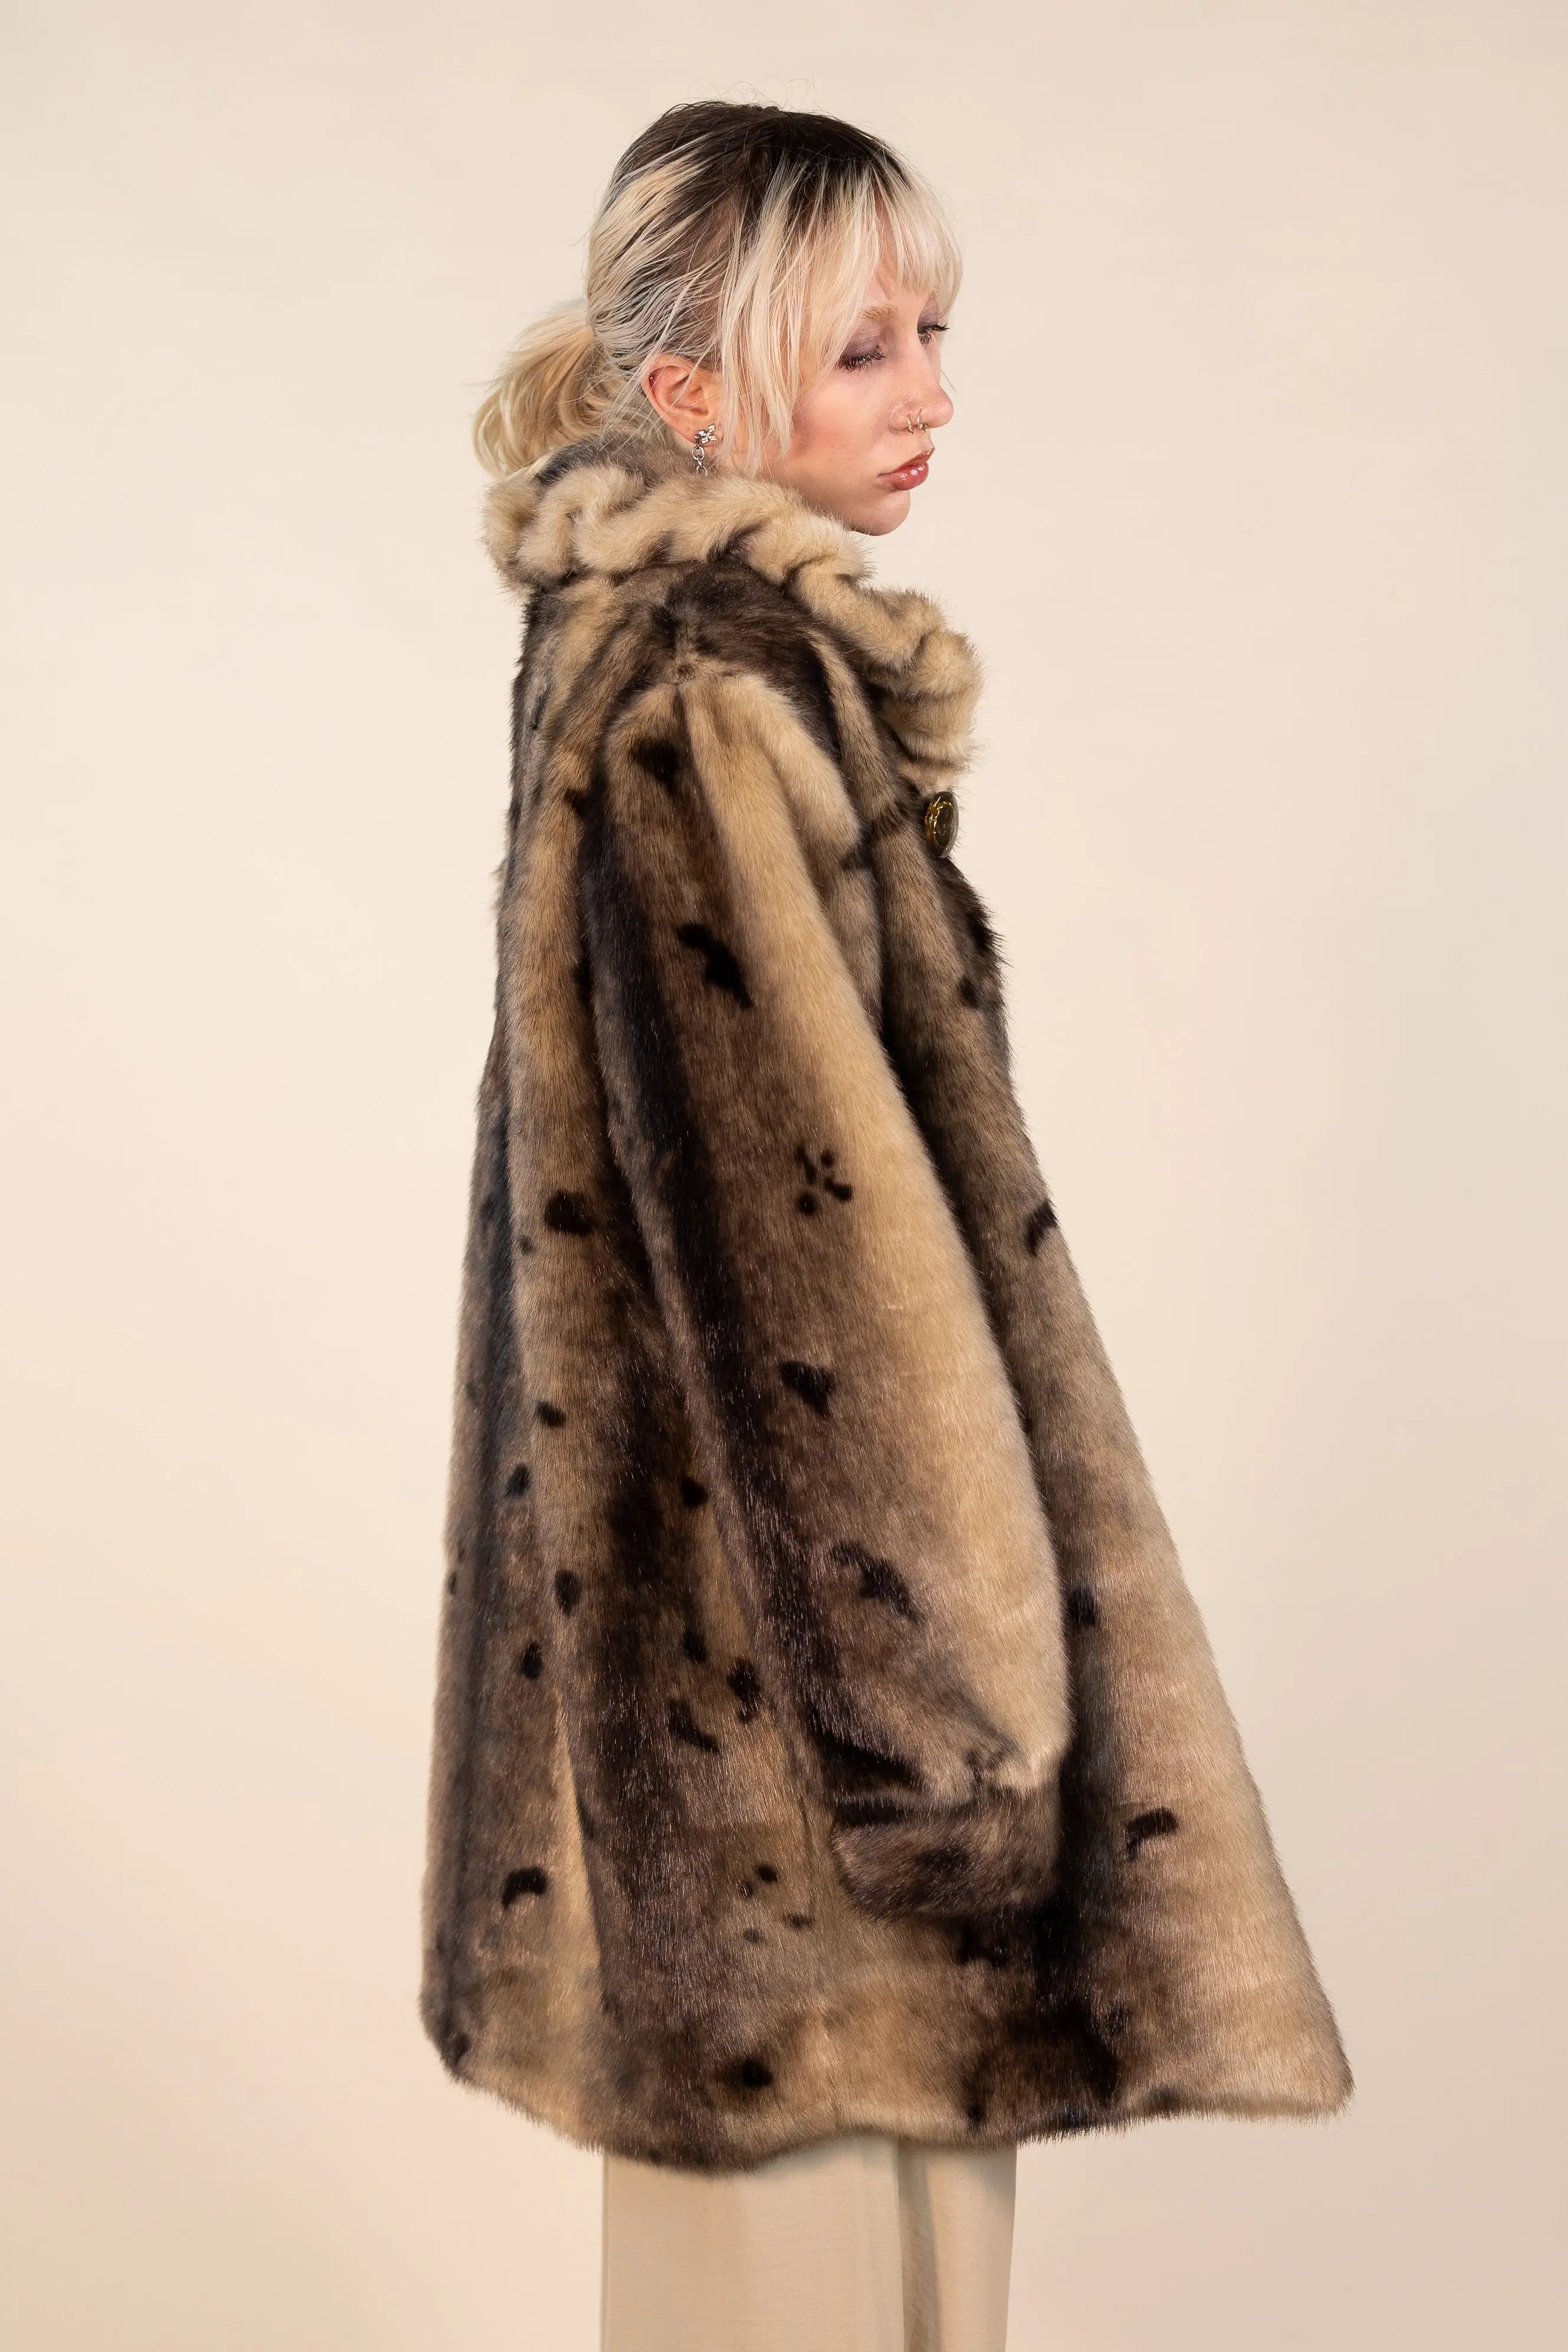 Conos - Faux Fur Coat- ThriftTale.com - Vintage and second handclothing